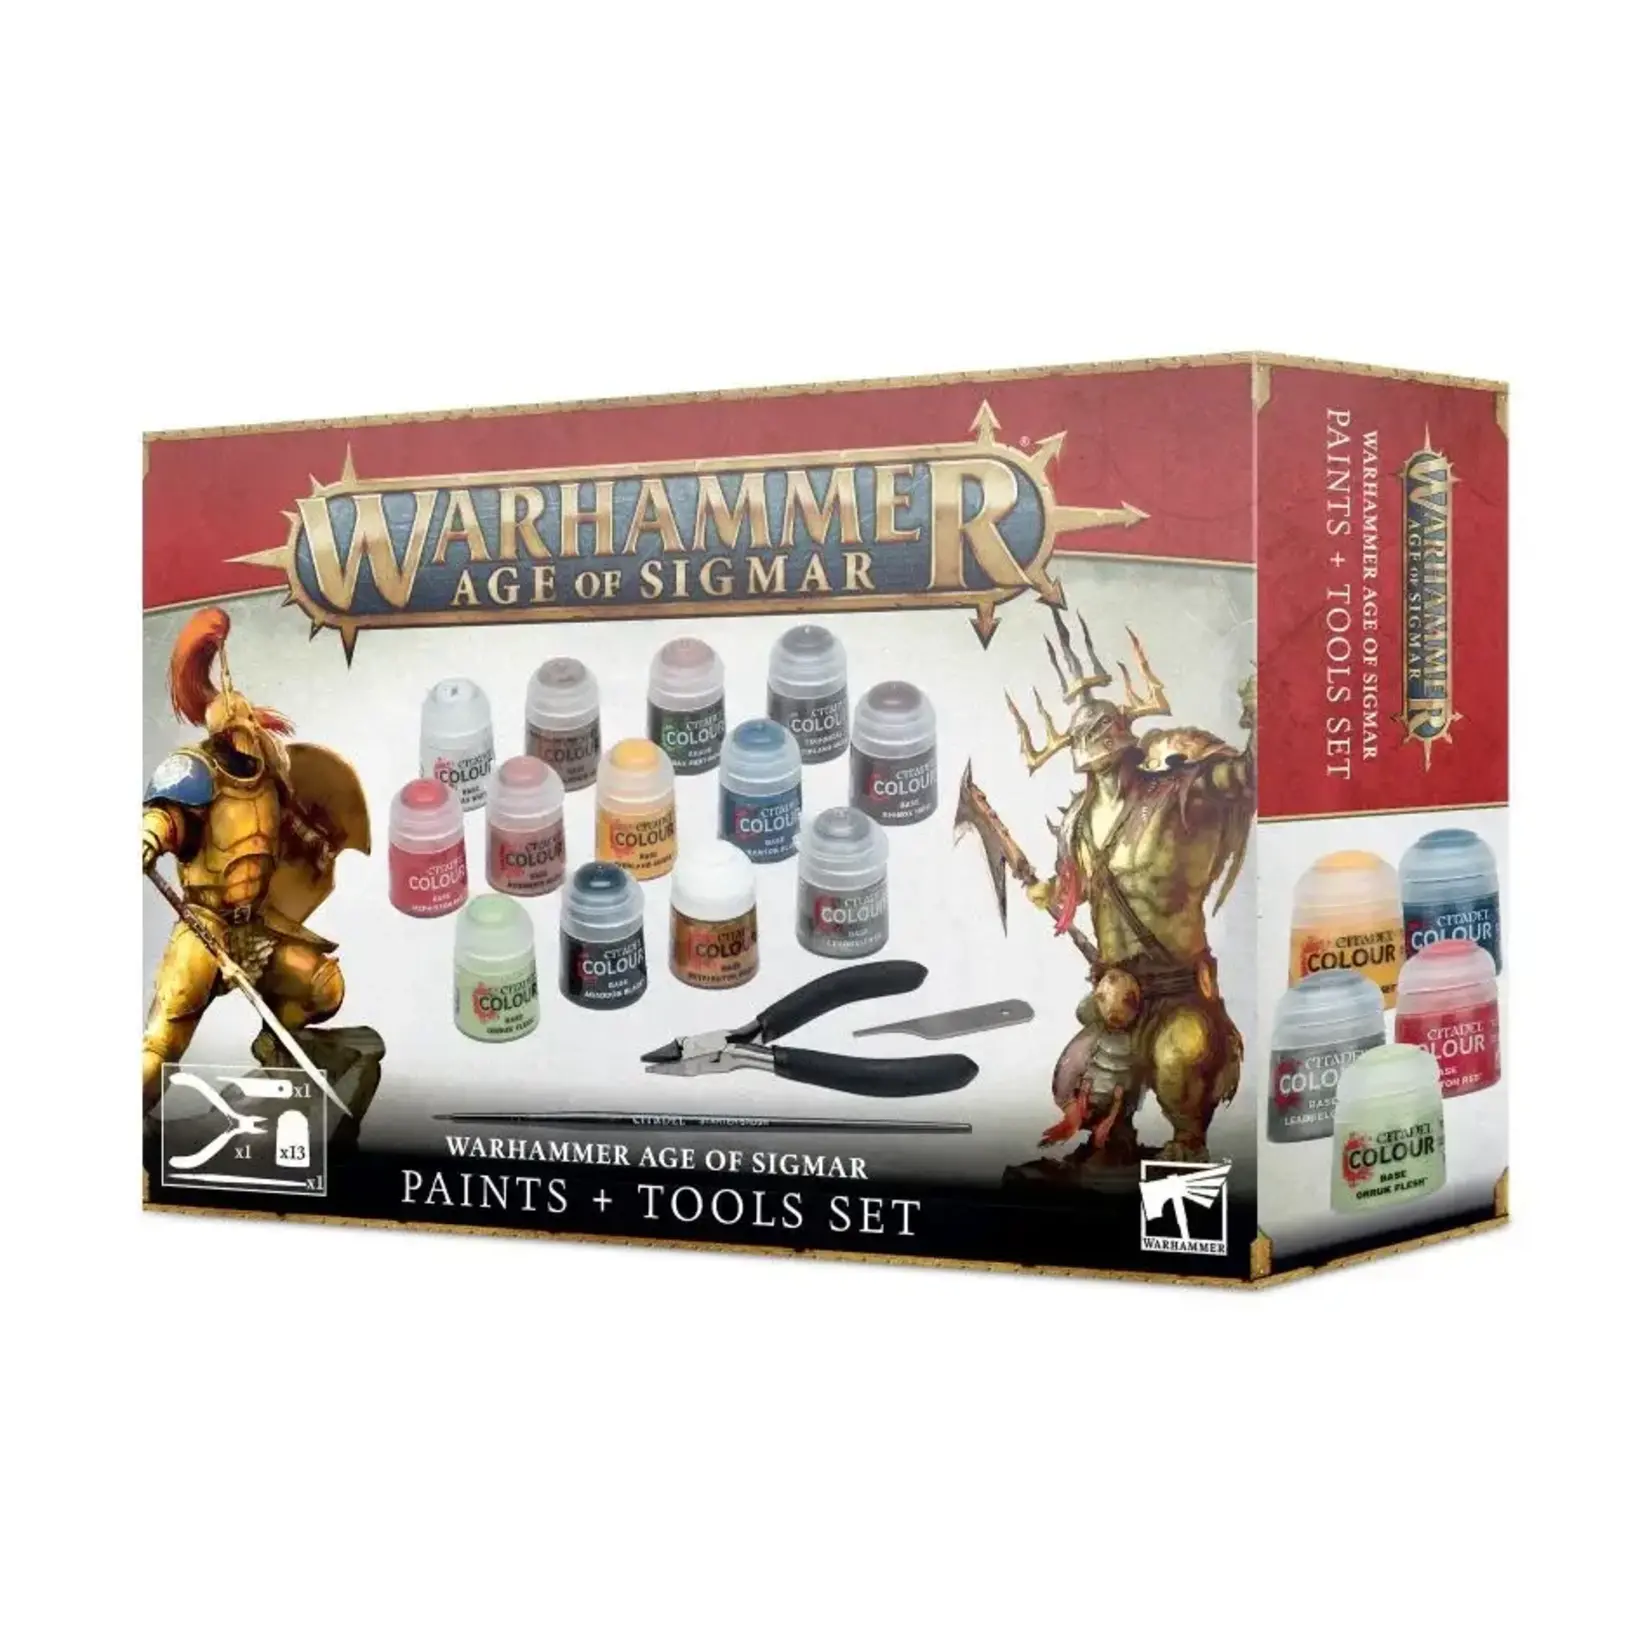 WarHammer Warhammer Age of Sigmar Paints + Tools Set